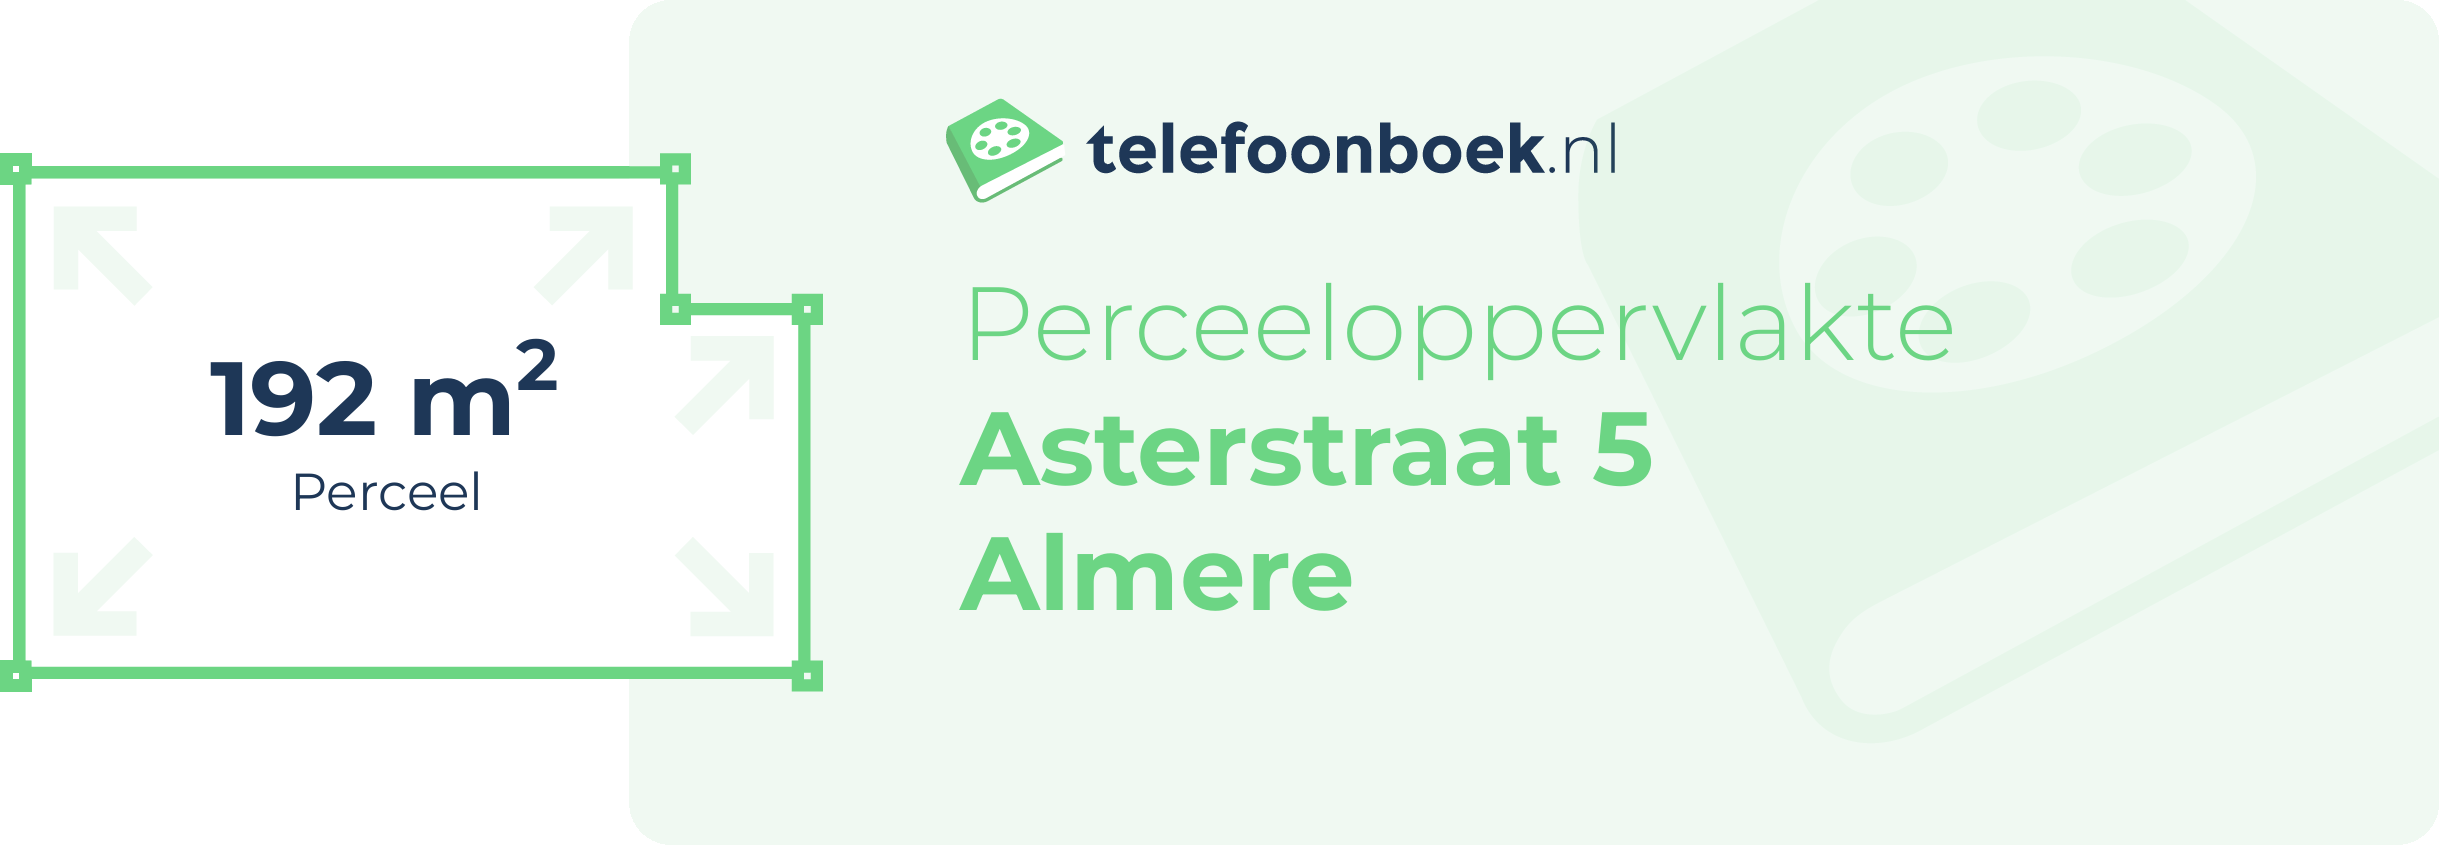 Perceeloppervlakte Asterstraat 5 Almere